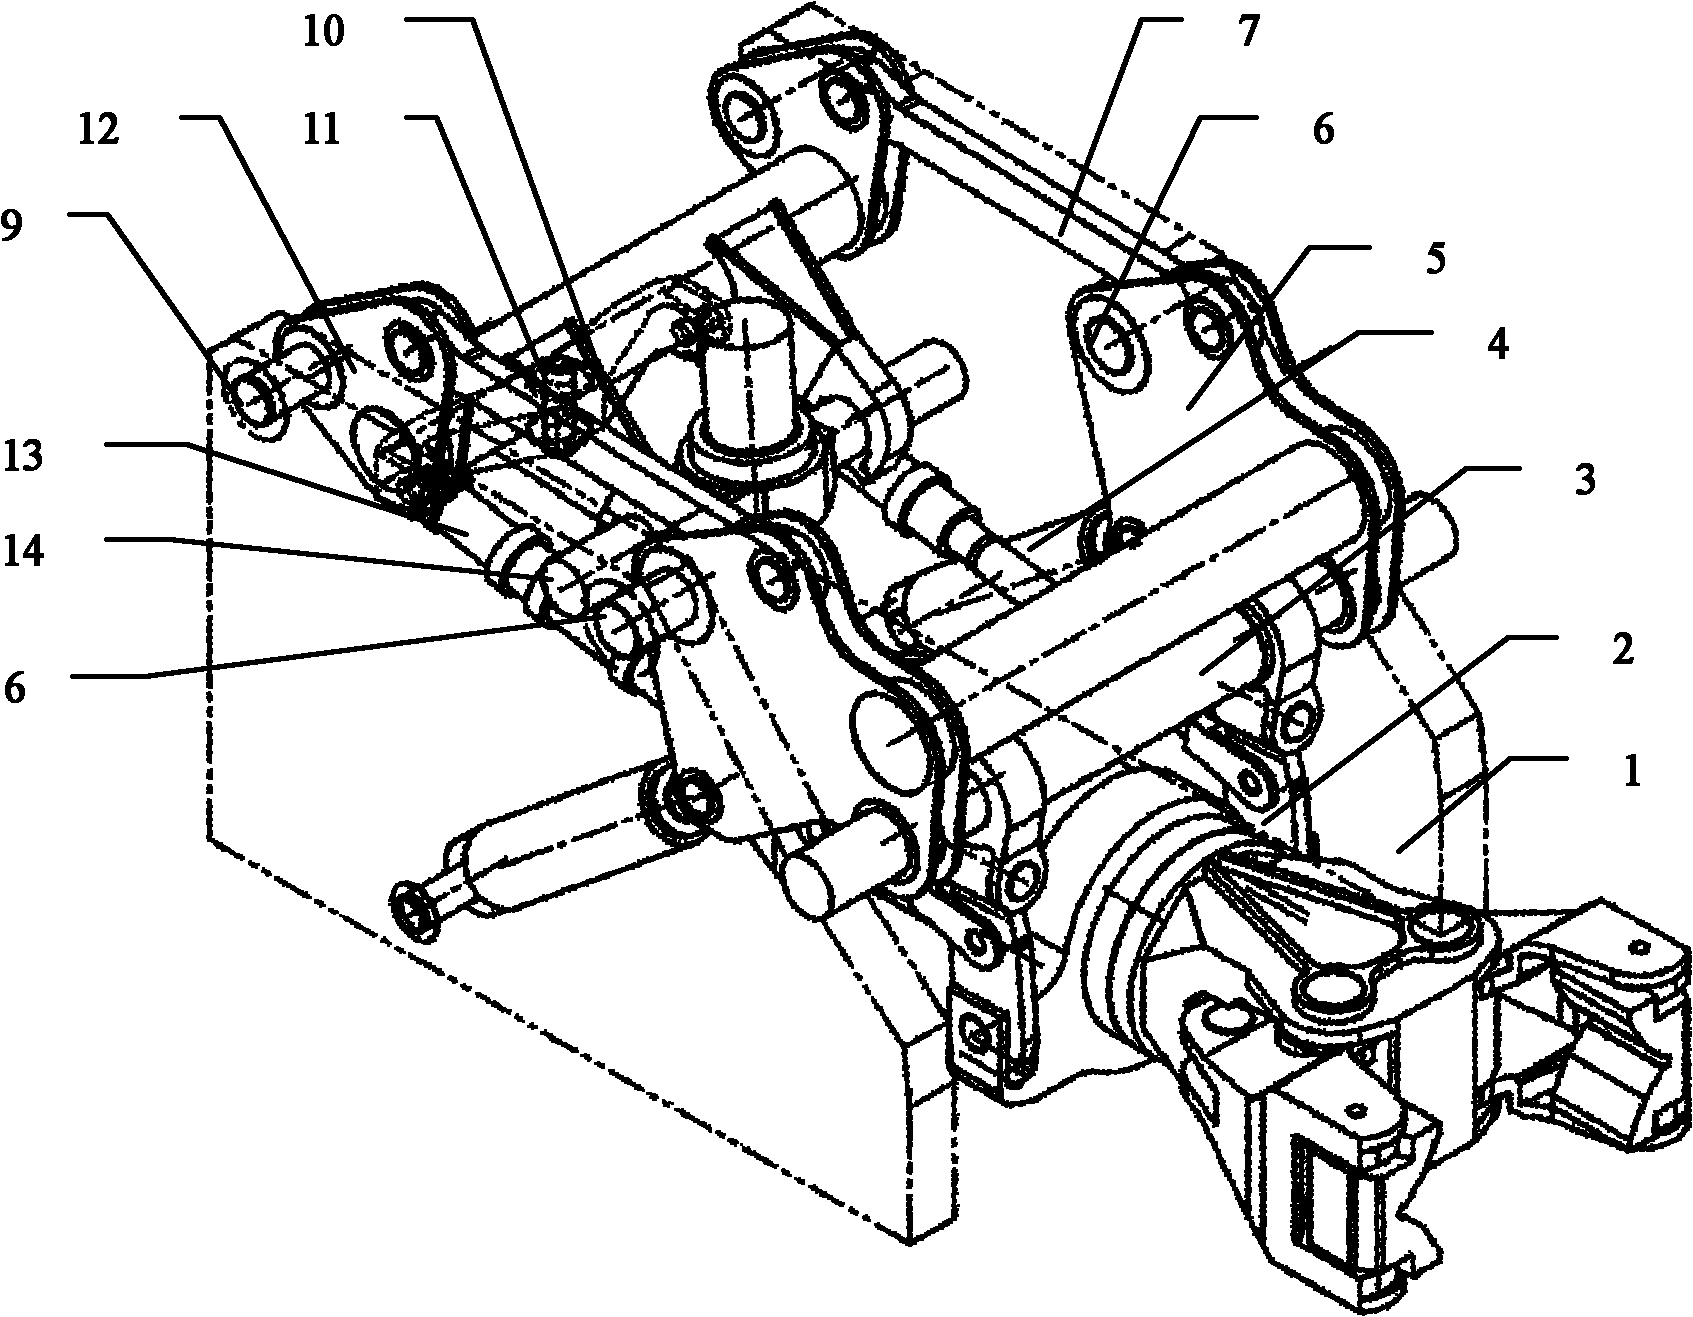 Claw beam lifting mechanism for forging manipulator